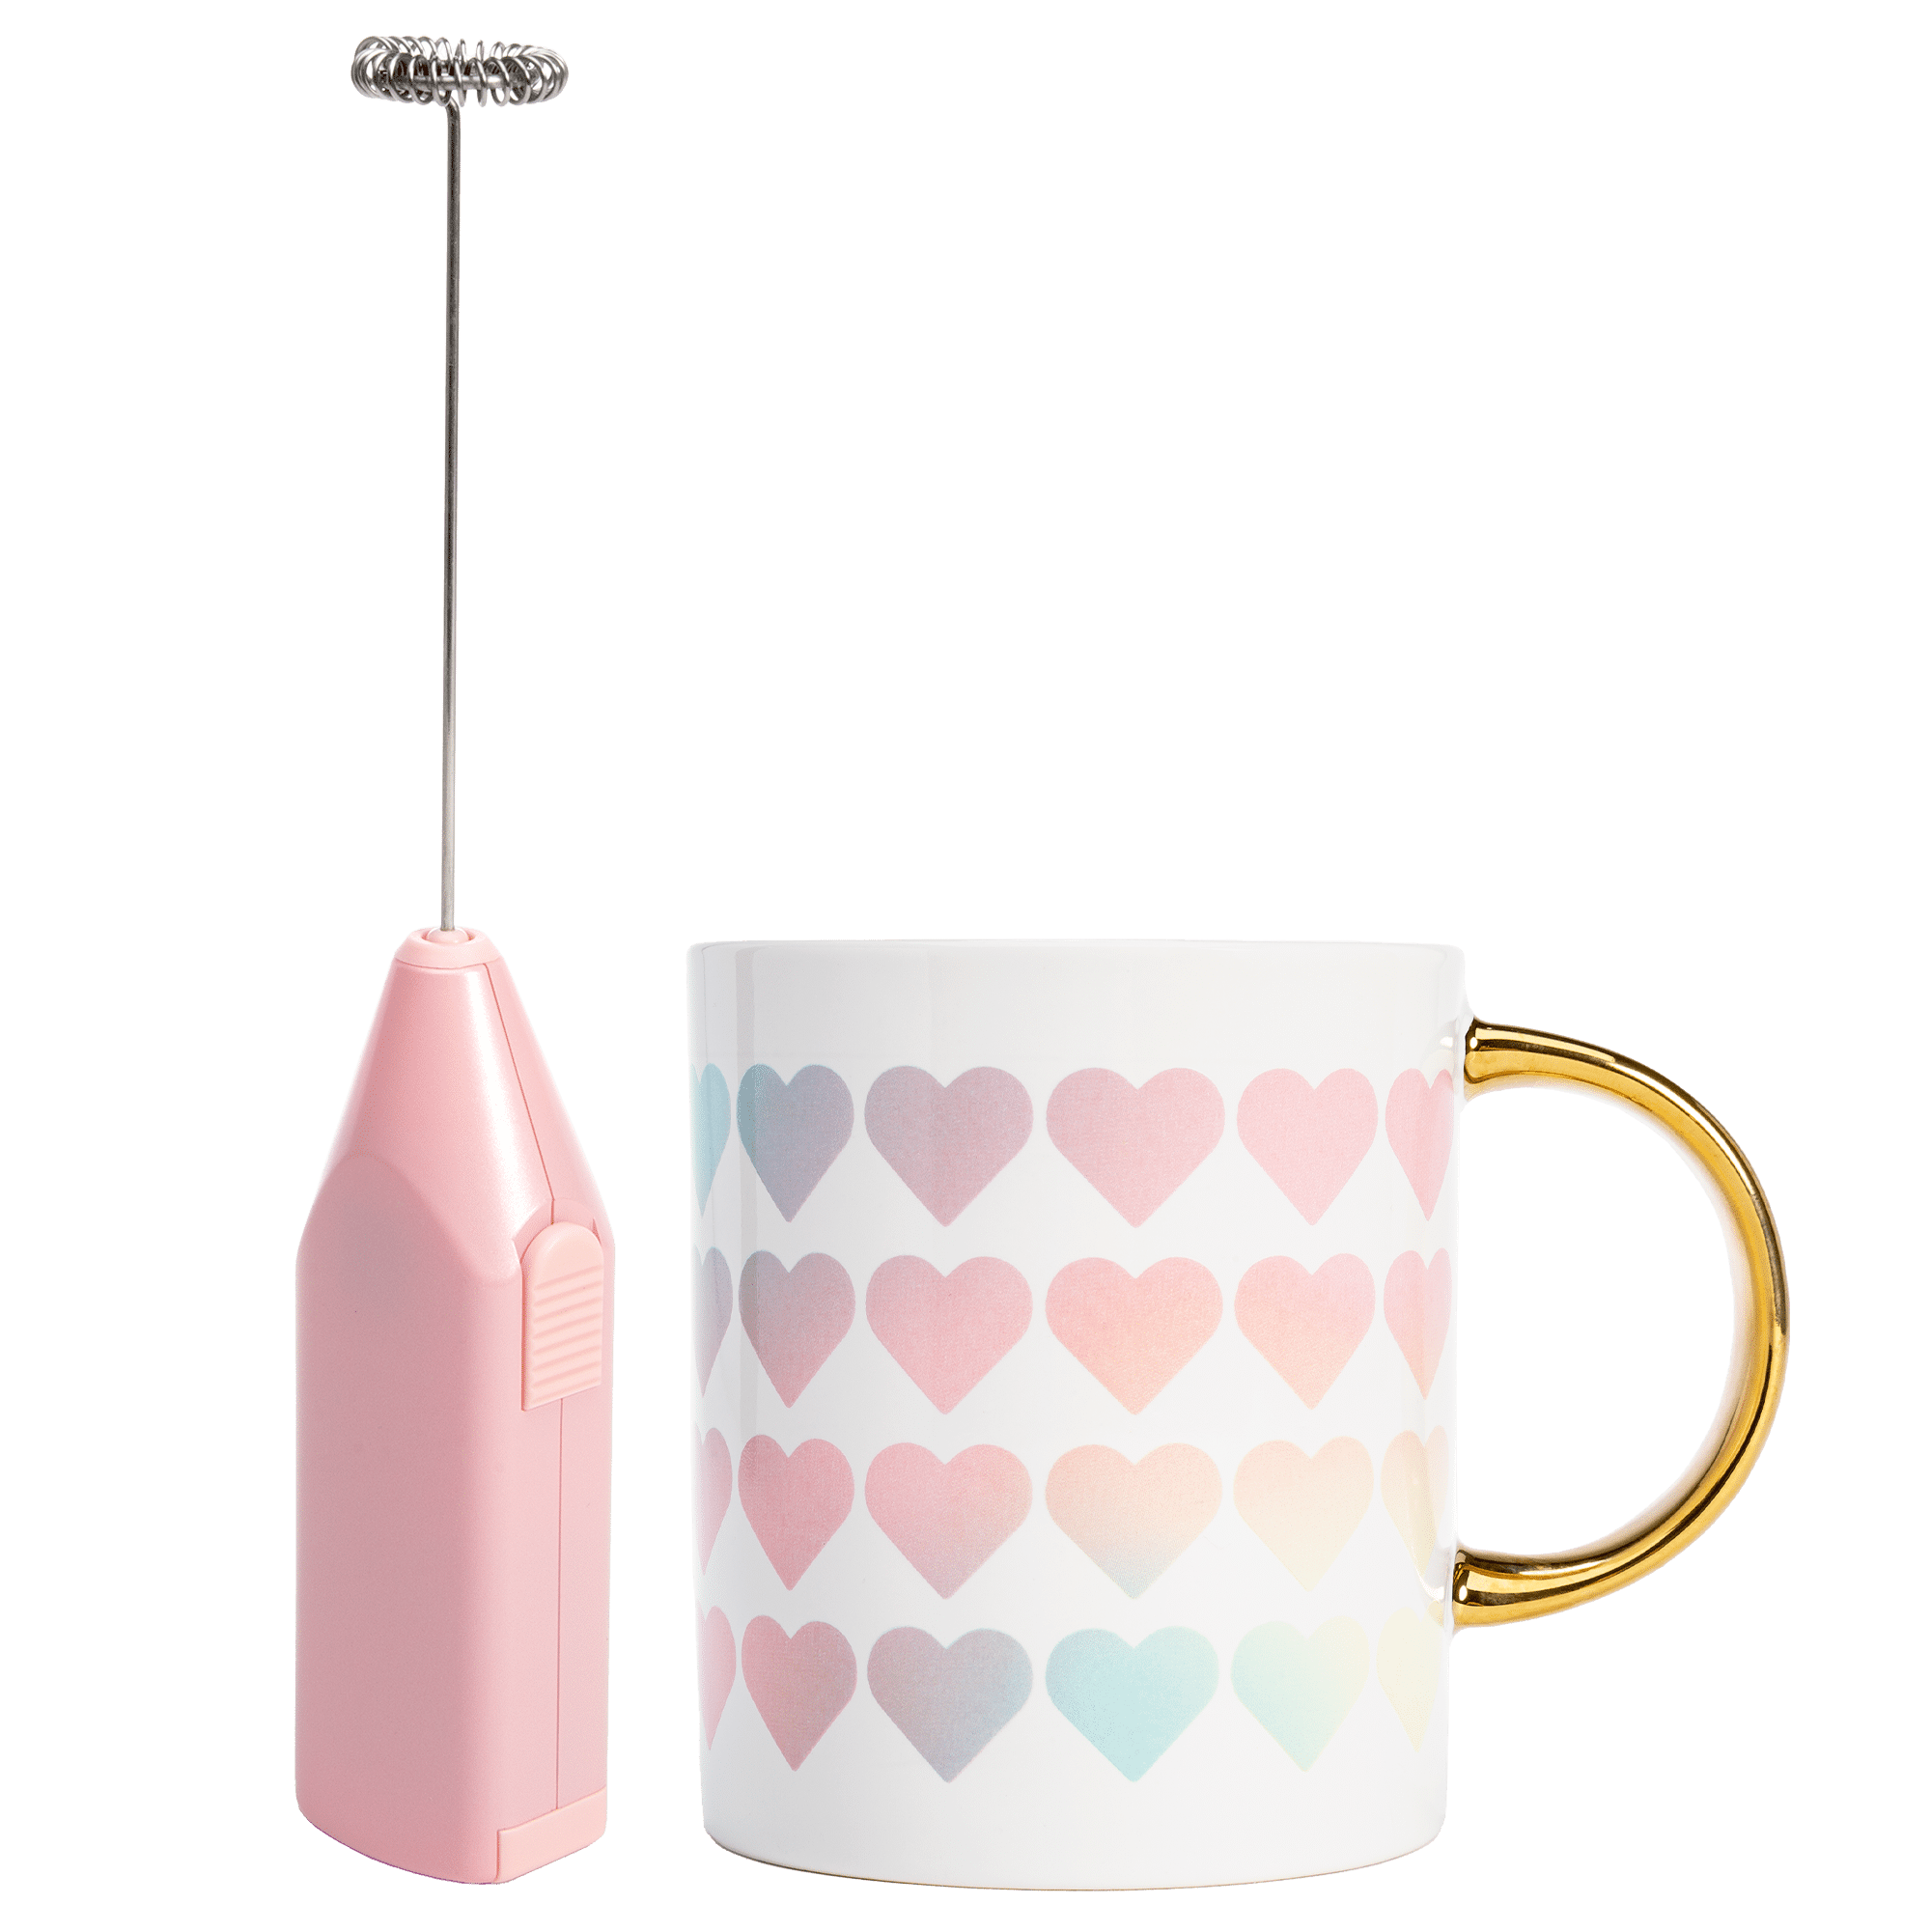 Paris Hilton Electric Mug Warmer, Portable Beverage Warmer, Pink